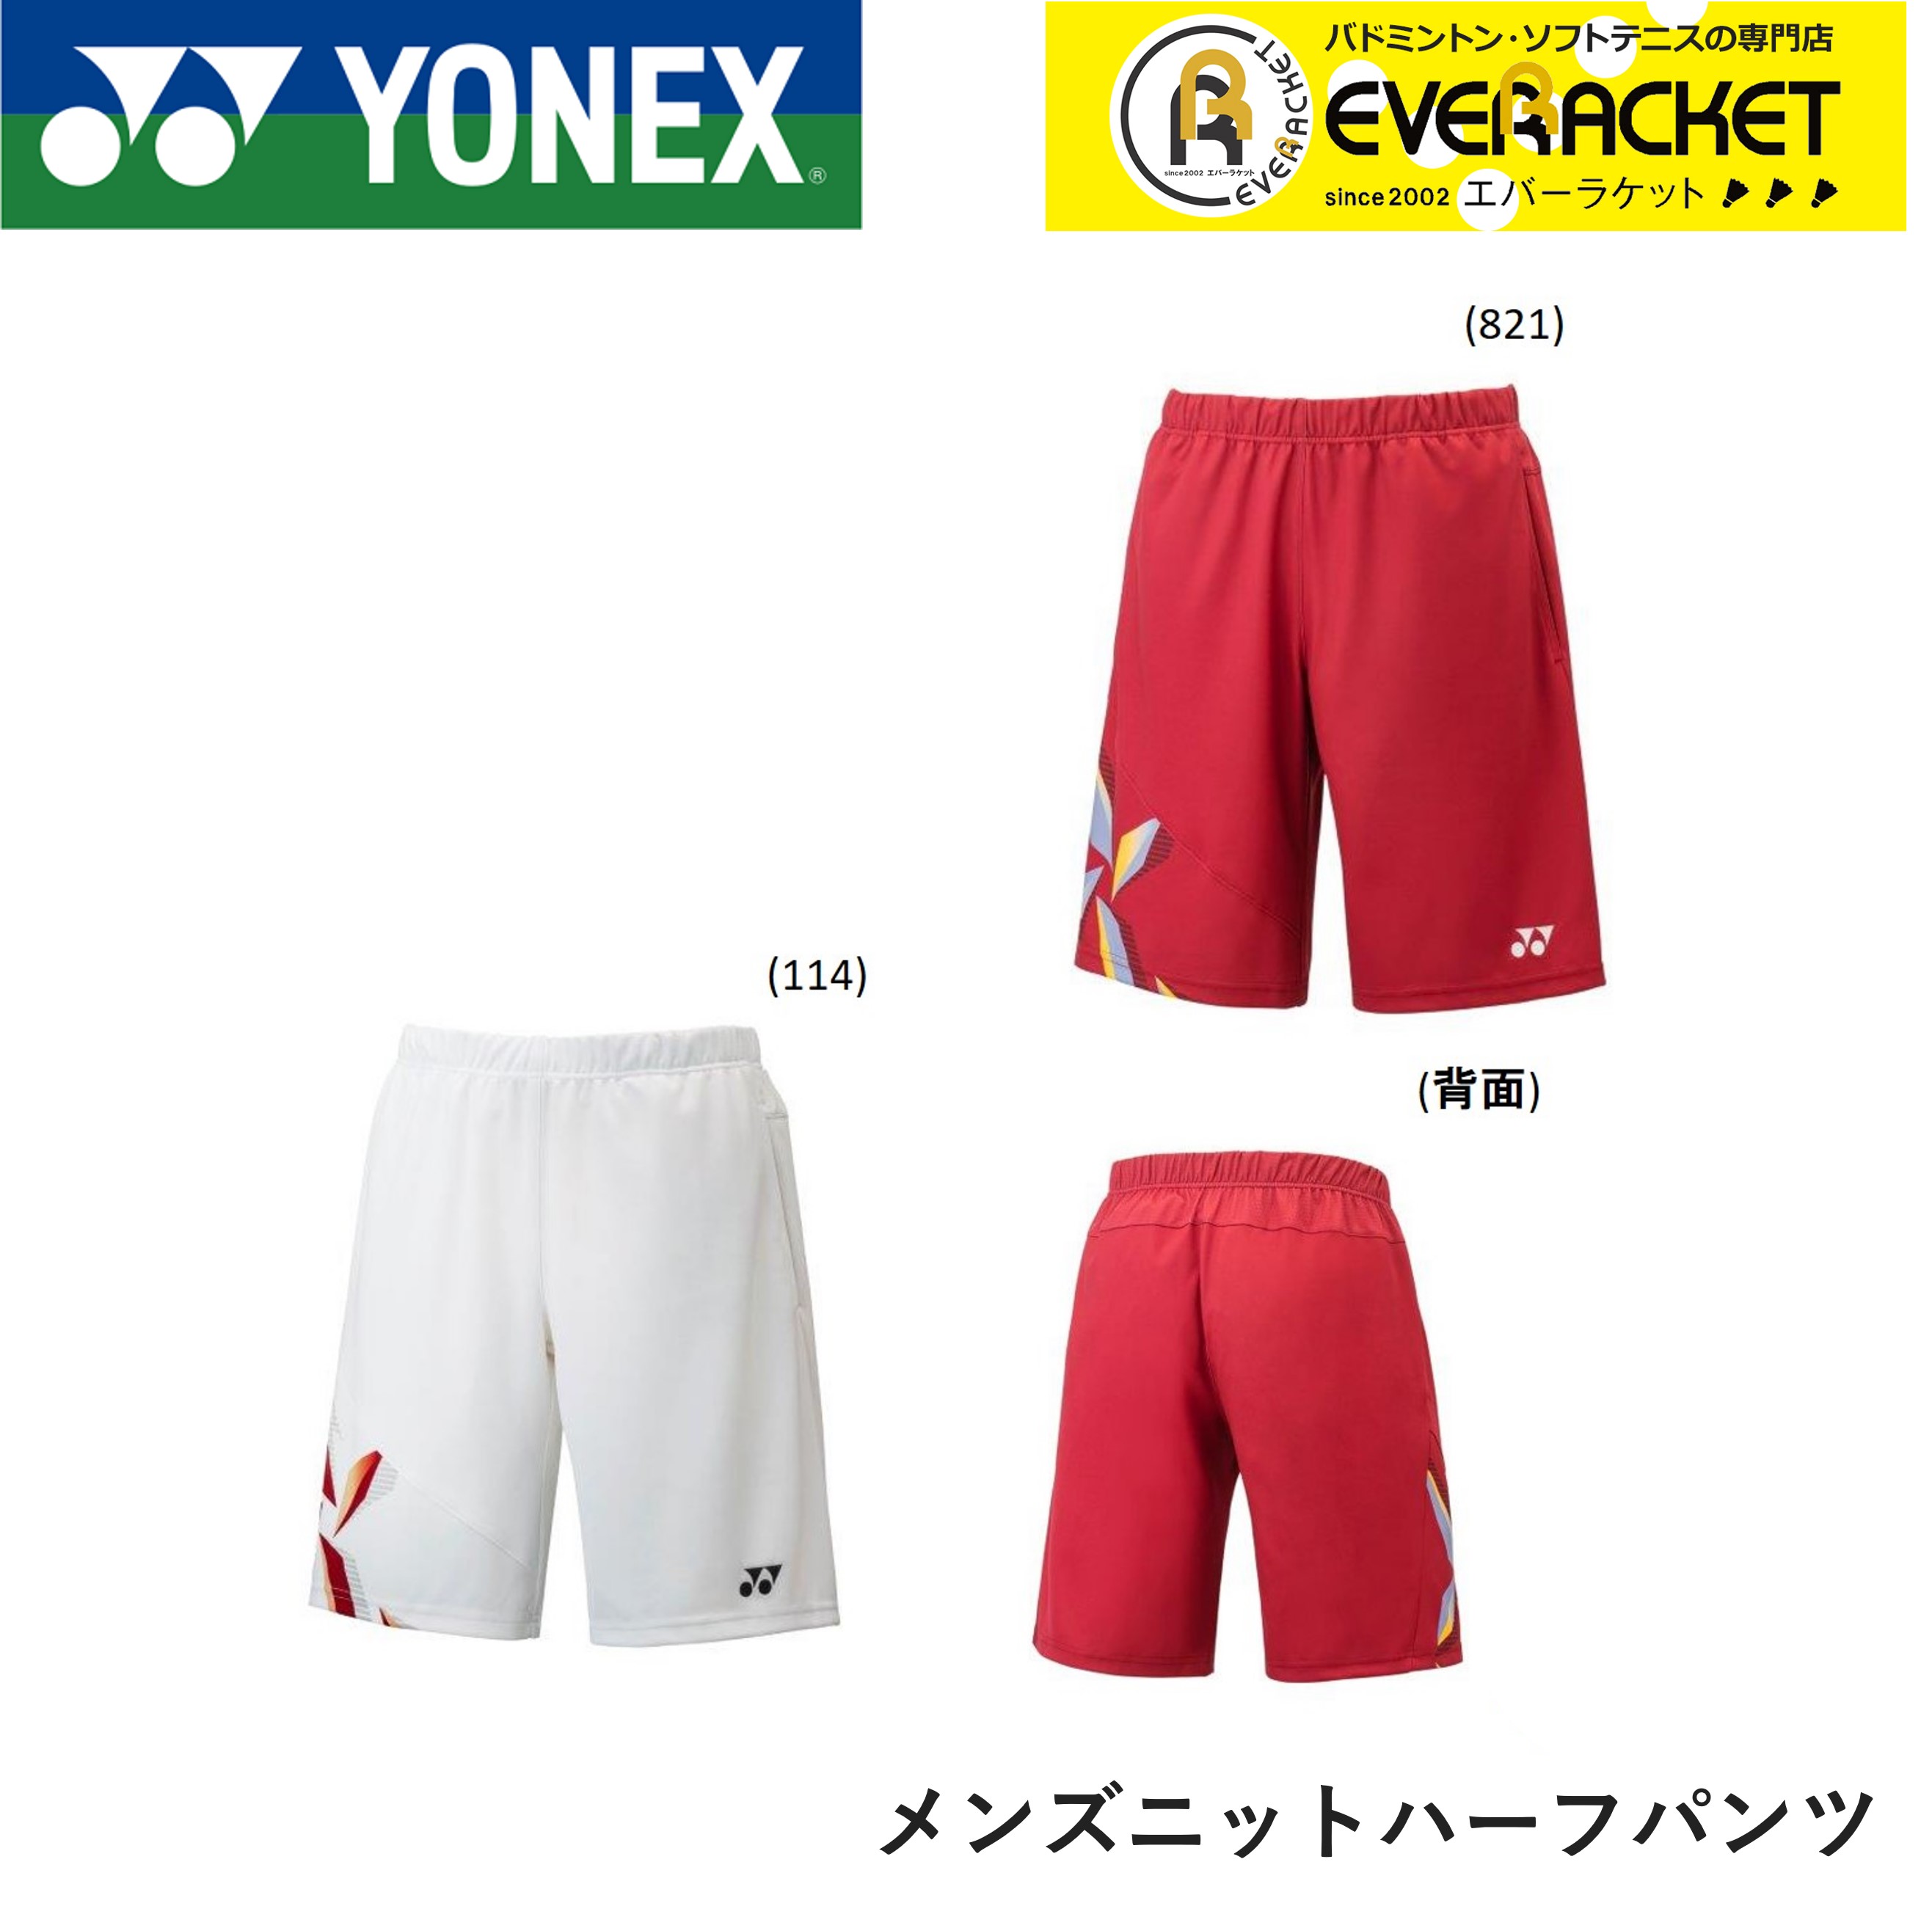 YONEXハーフパンツ 日本代表着用 - ウェア